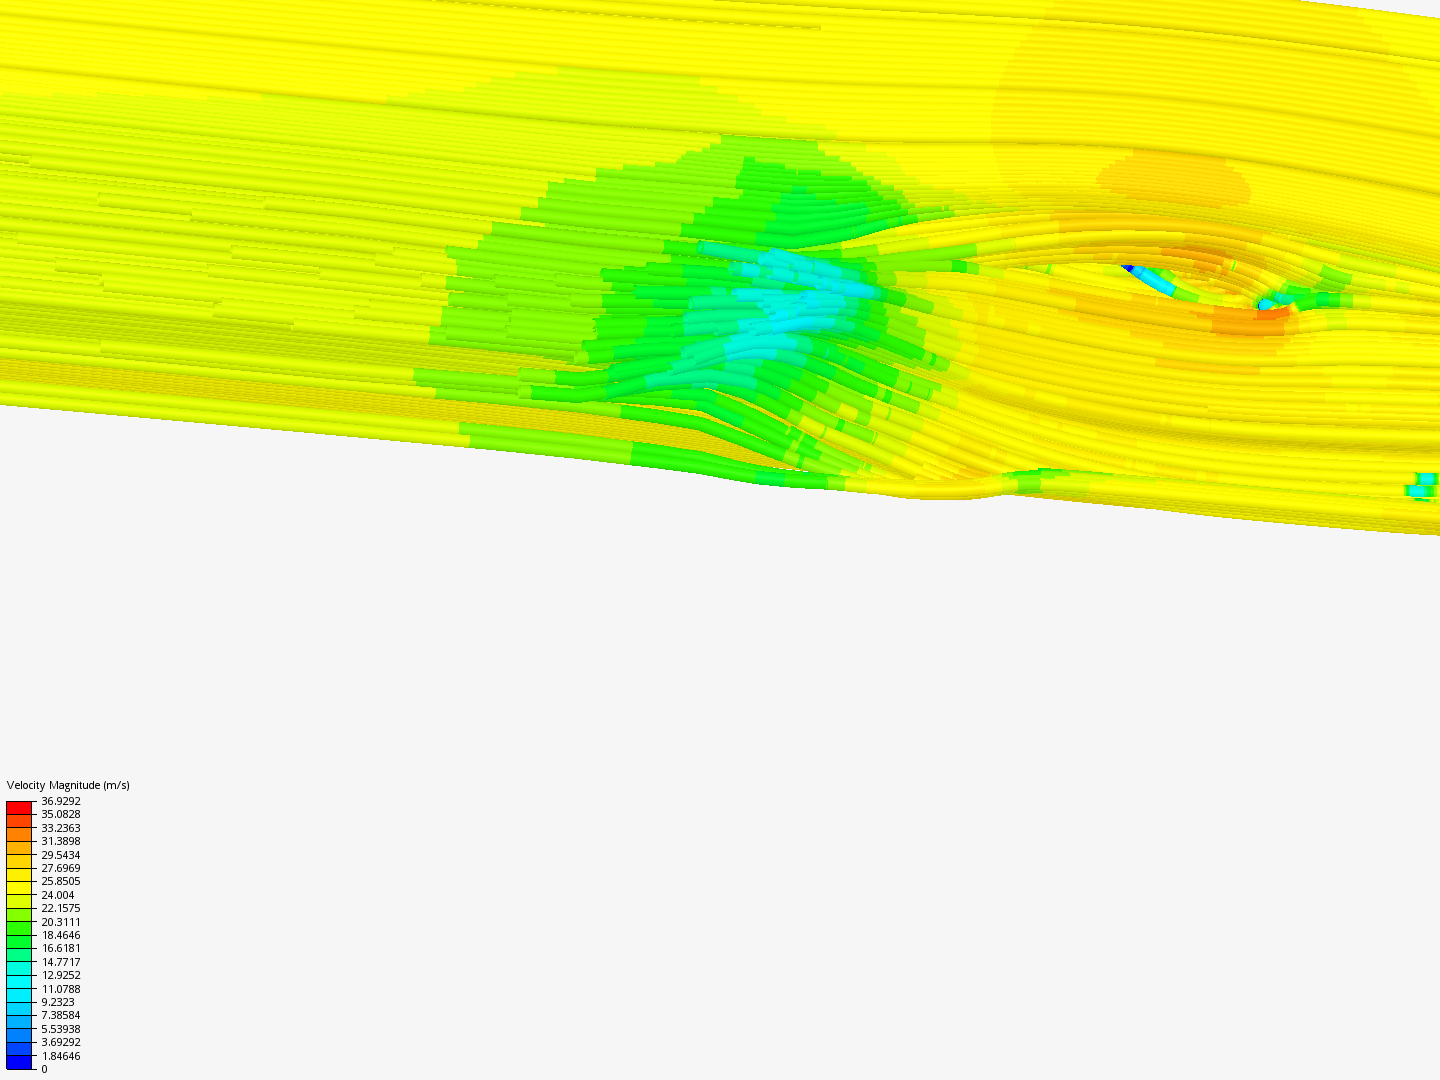 Fuselage Drag Coefficient Analysis image